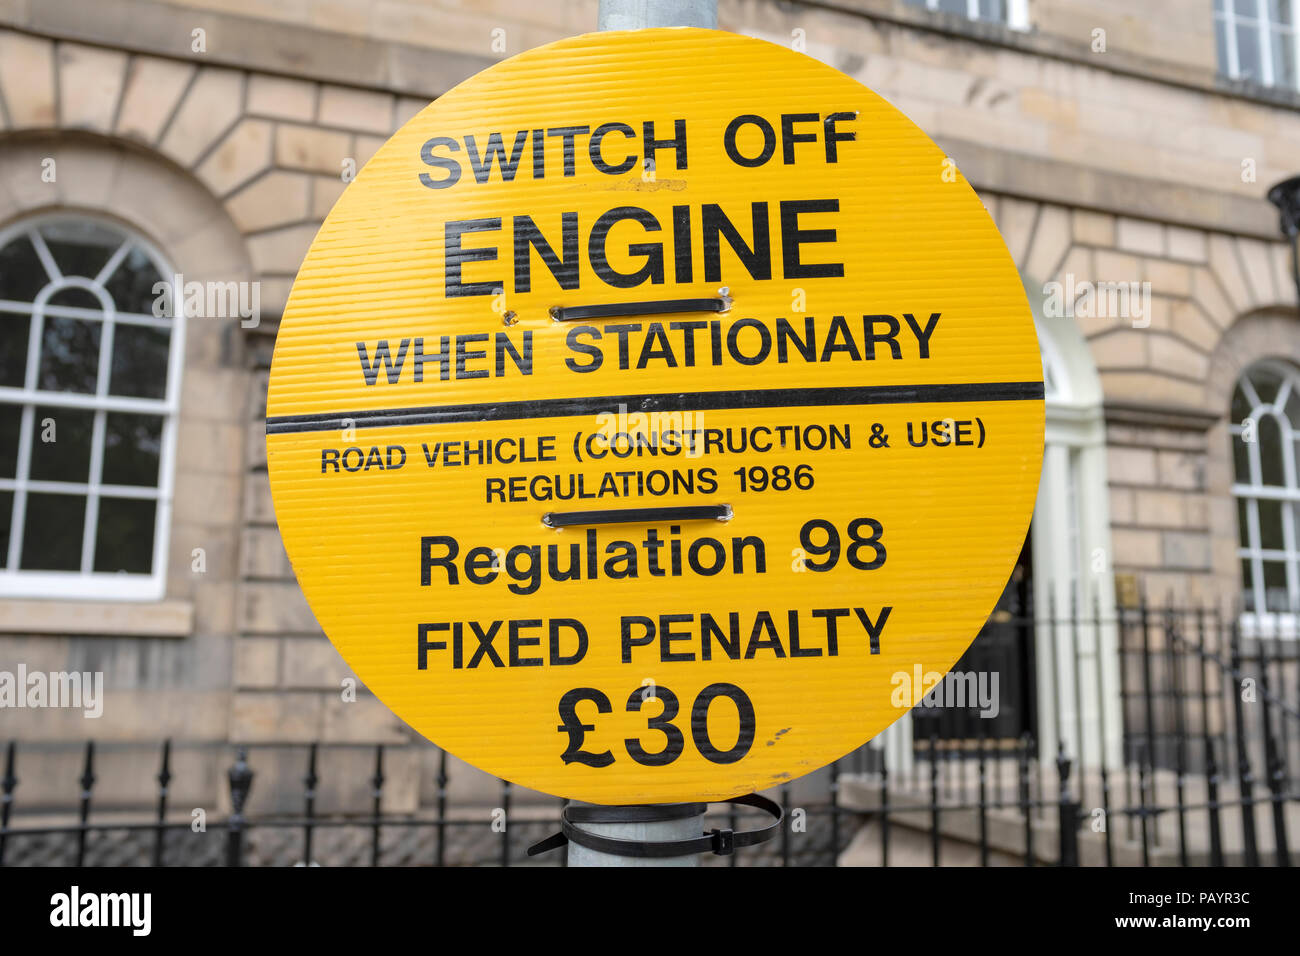 Switch Off Engine When Stationary sign in Charlotte Square, Edinburgh, Scotland, United Kingdom. Stock Photo